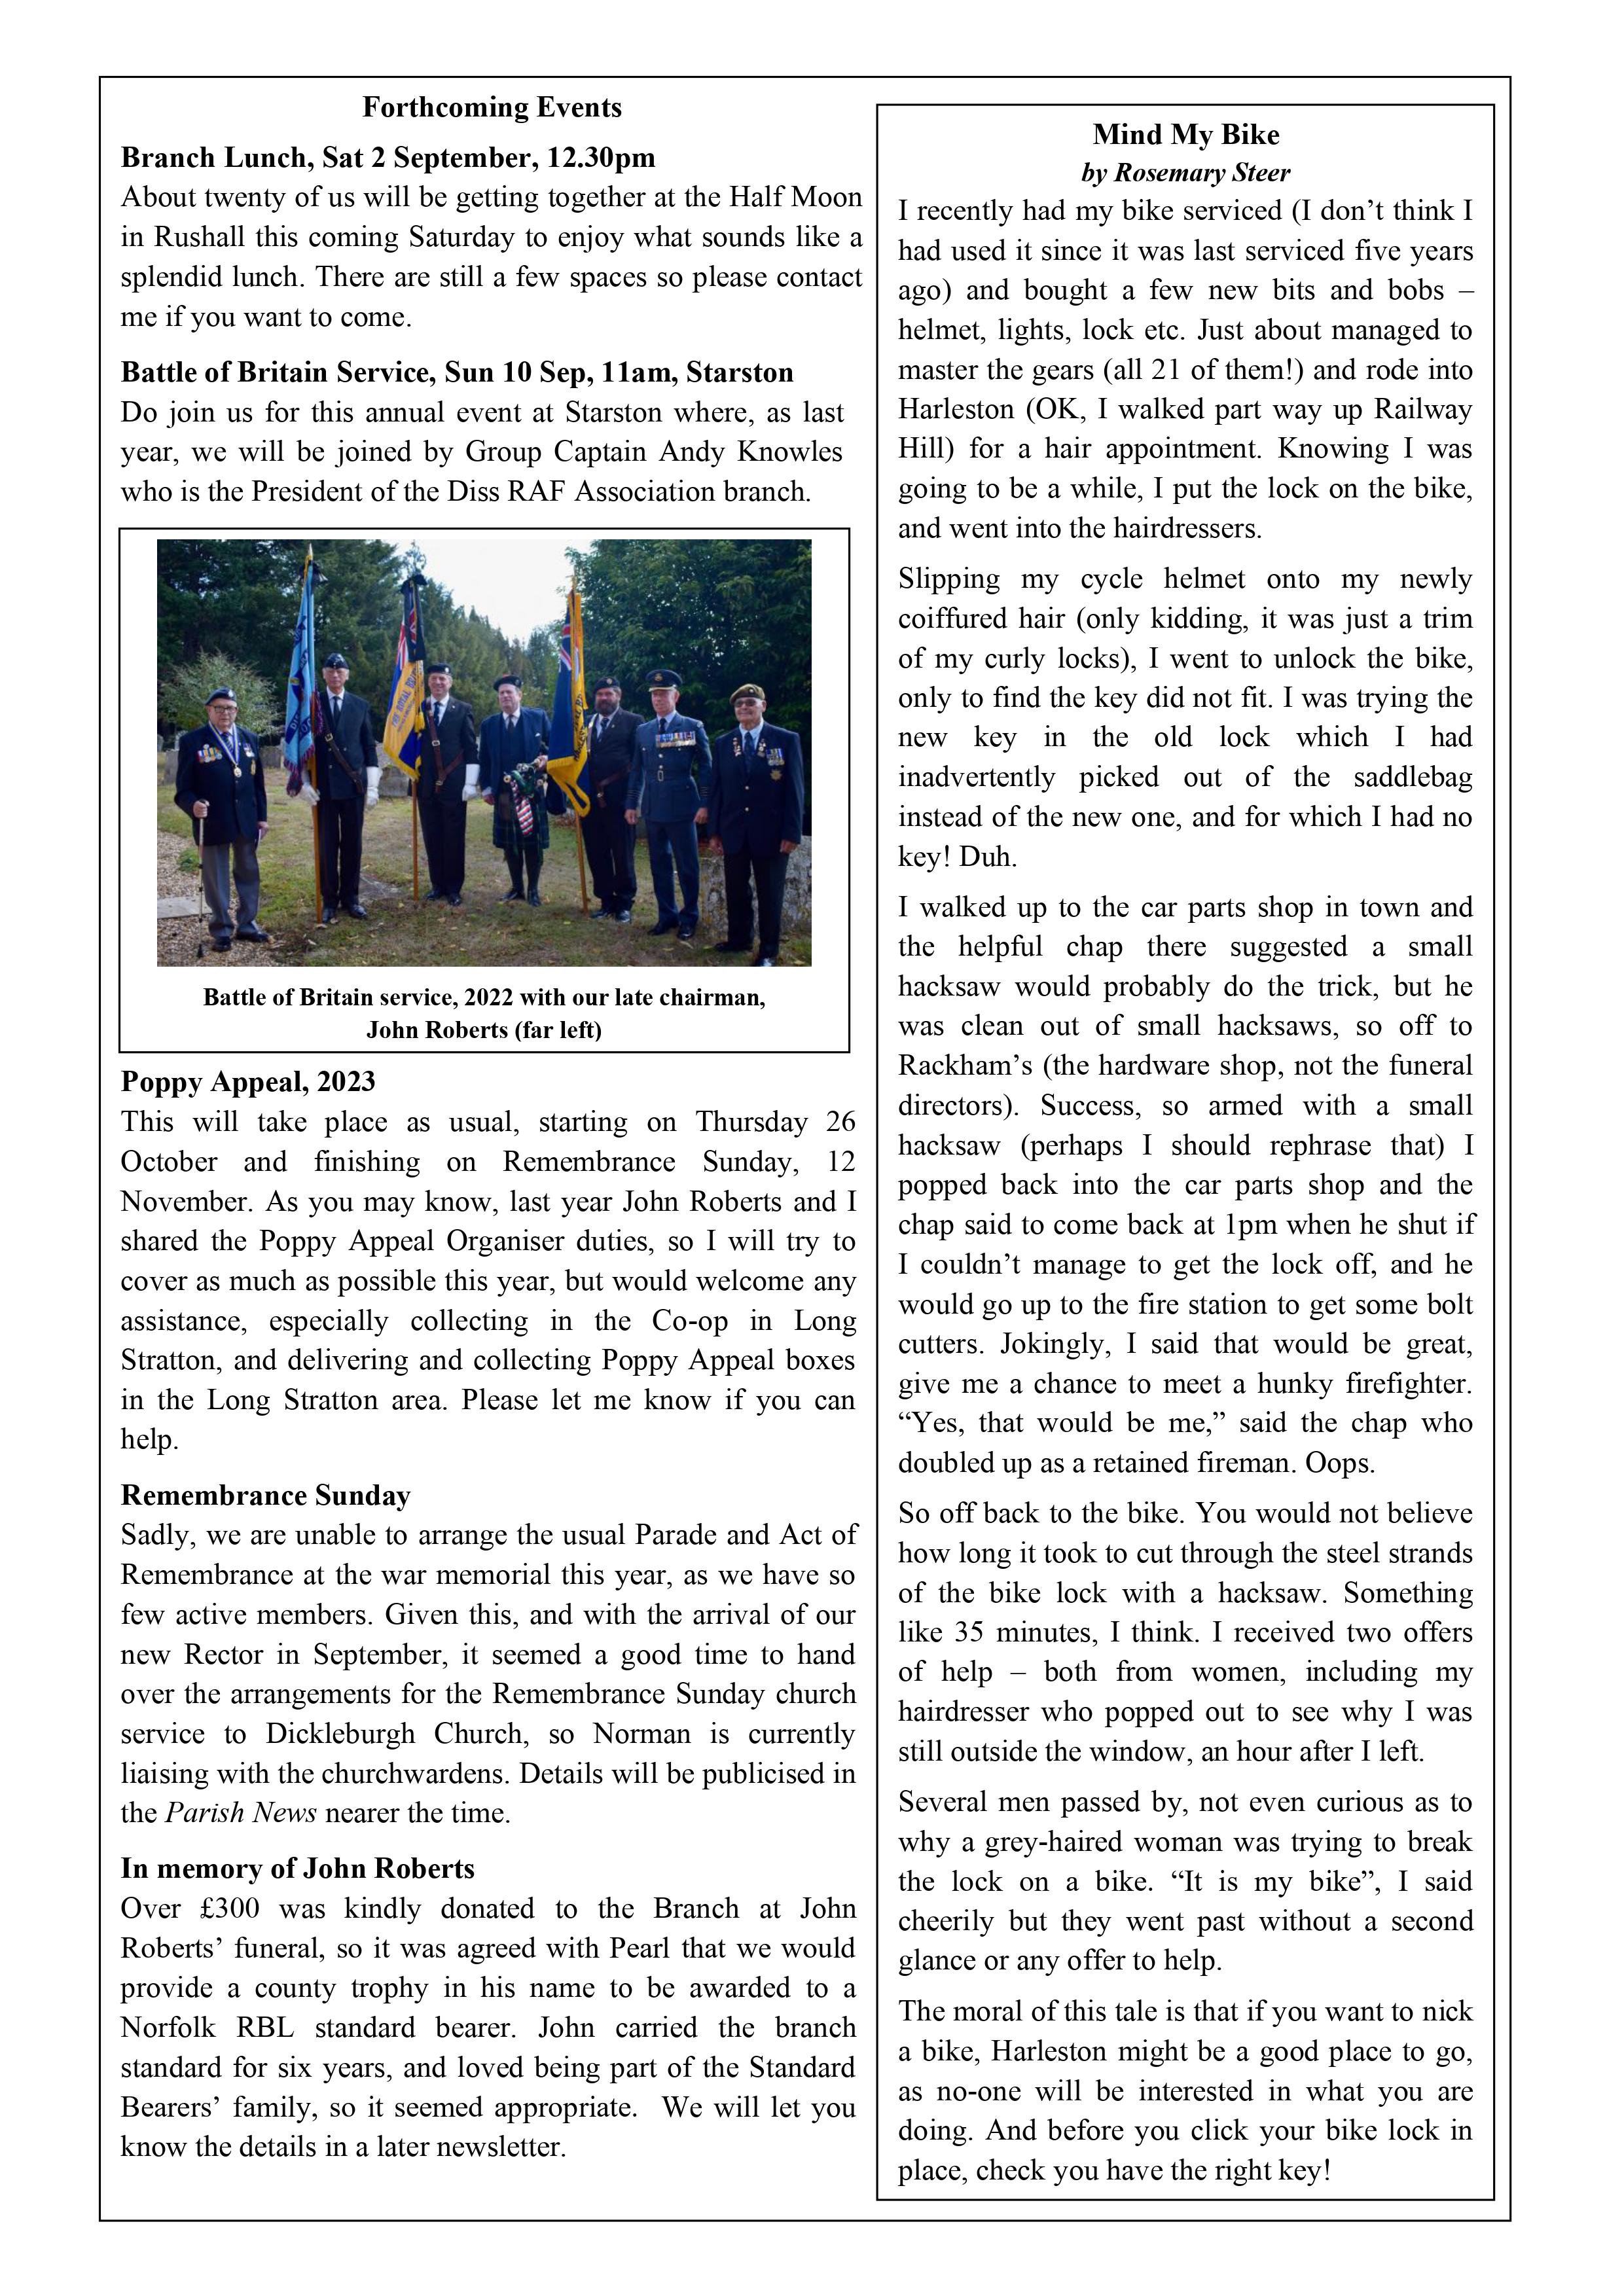 RBL Dickleburgh & District Newsletter